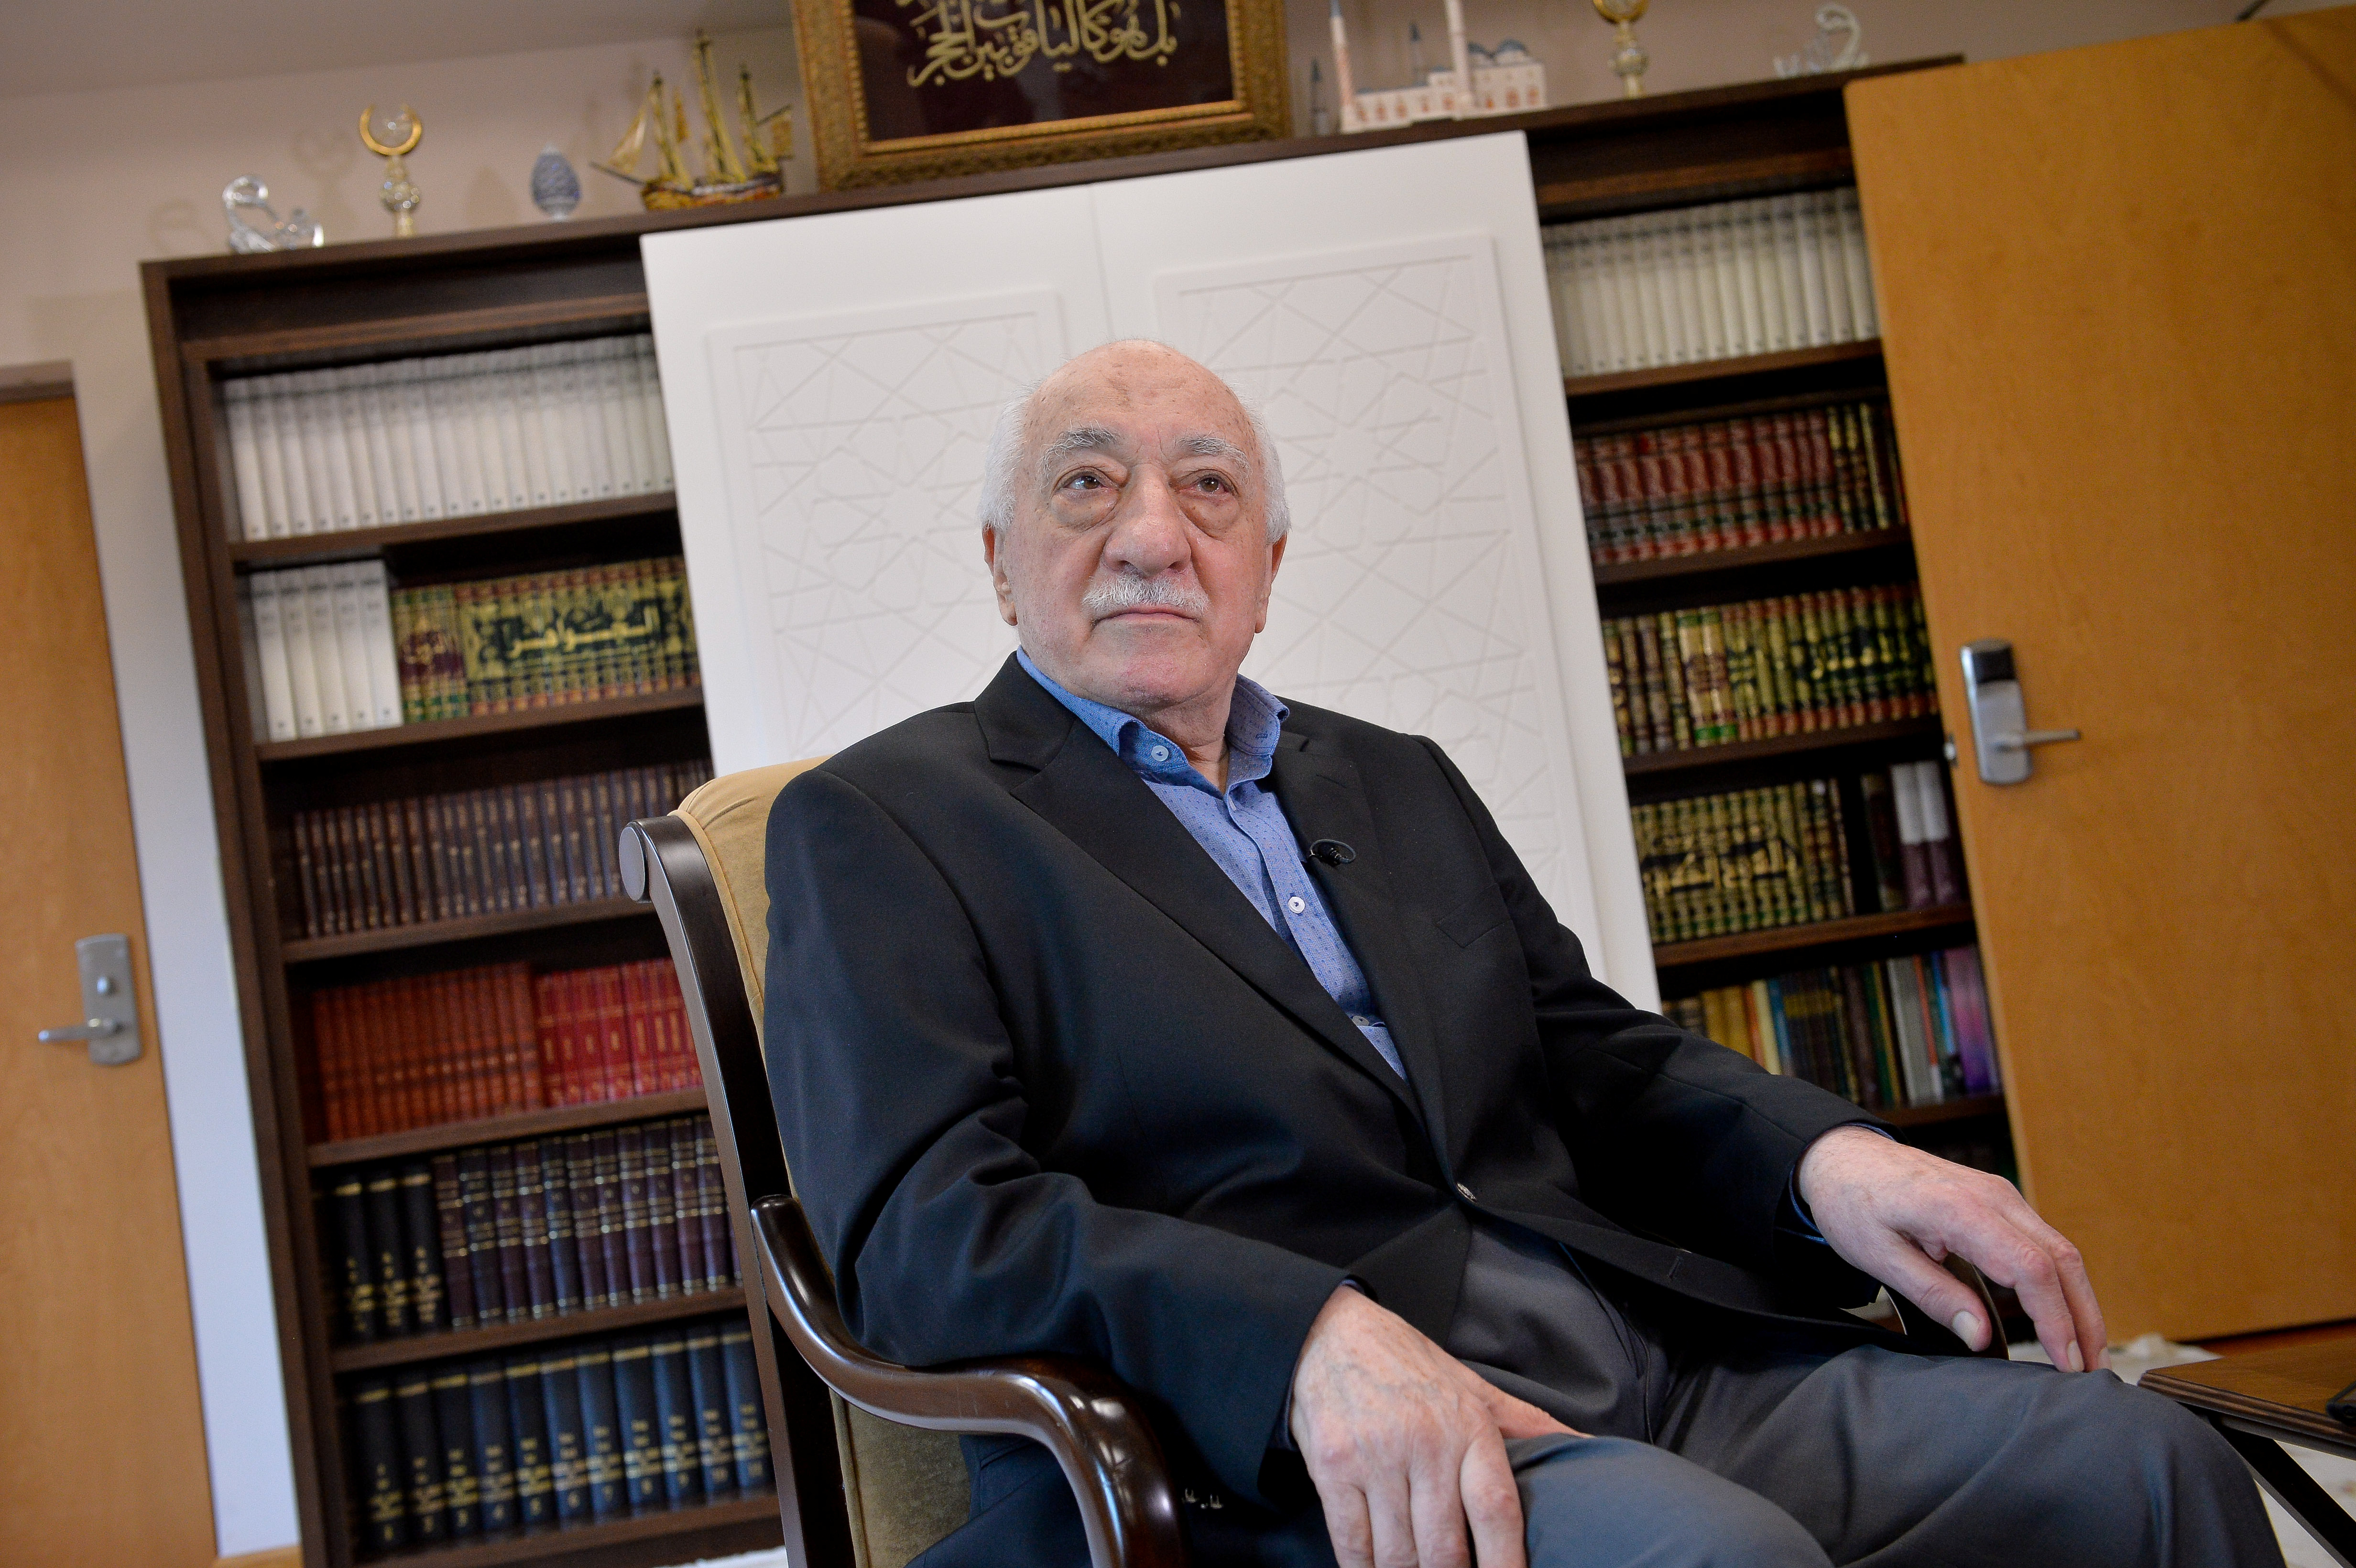 U.S.-based cleric Fethullah Gulen at his home in Saylorsburg